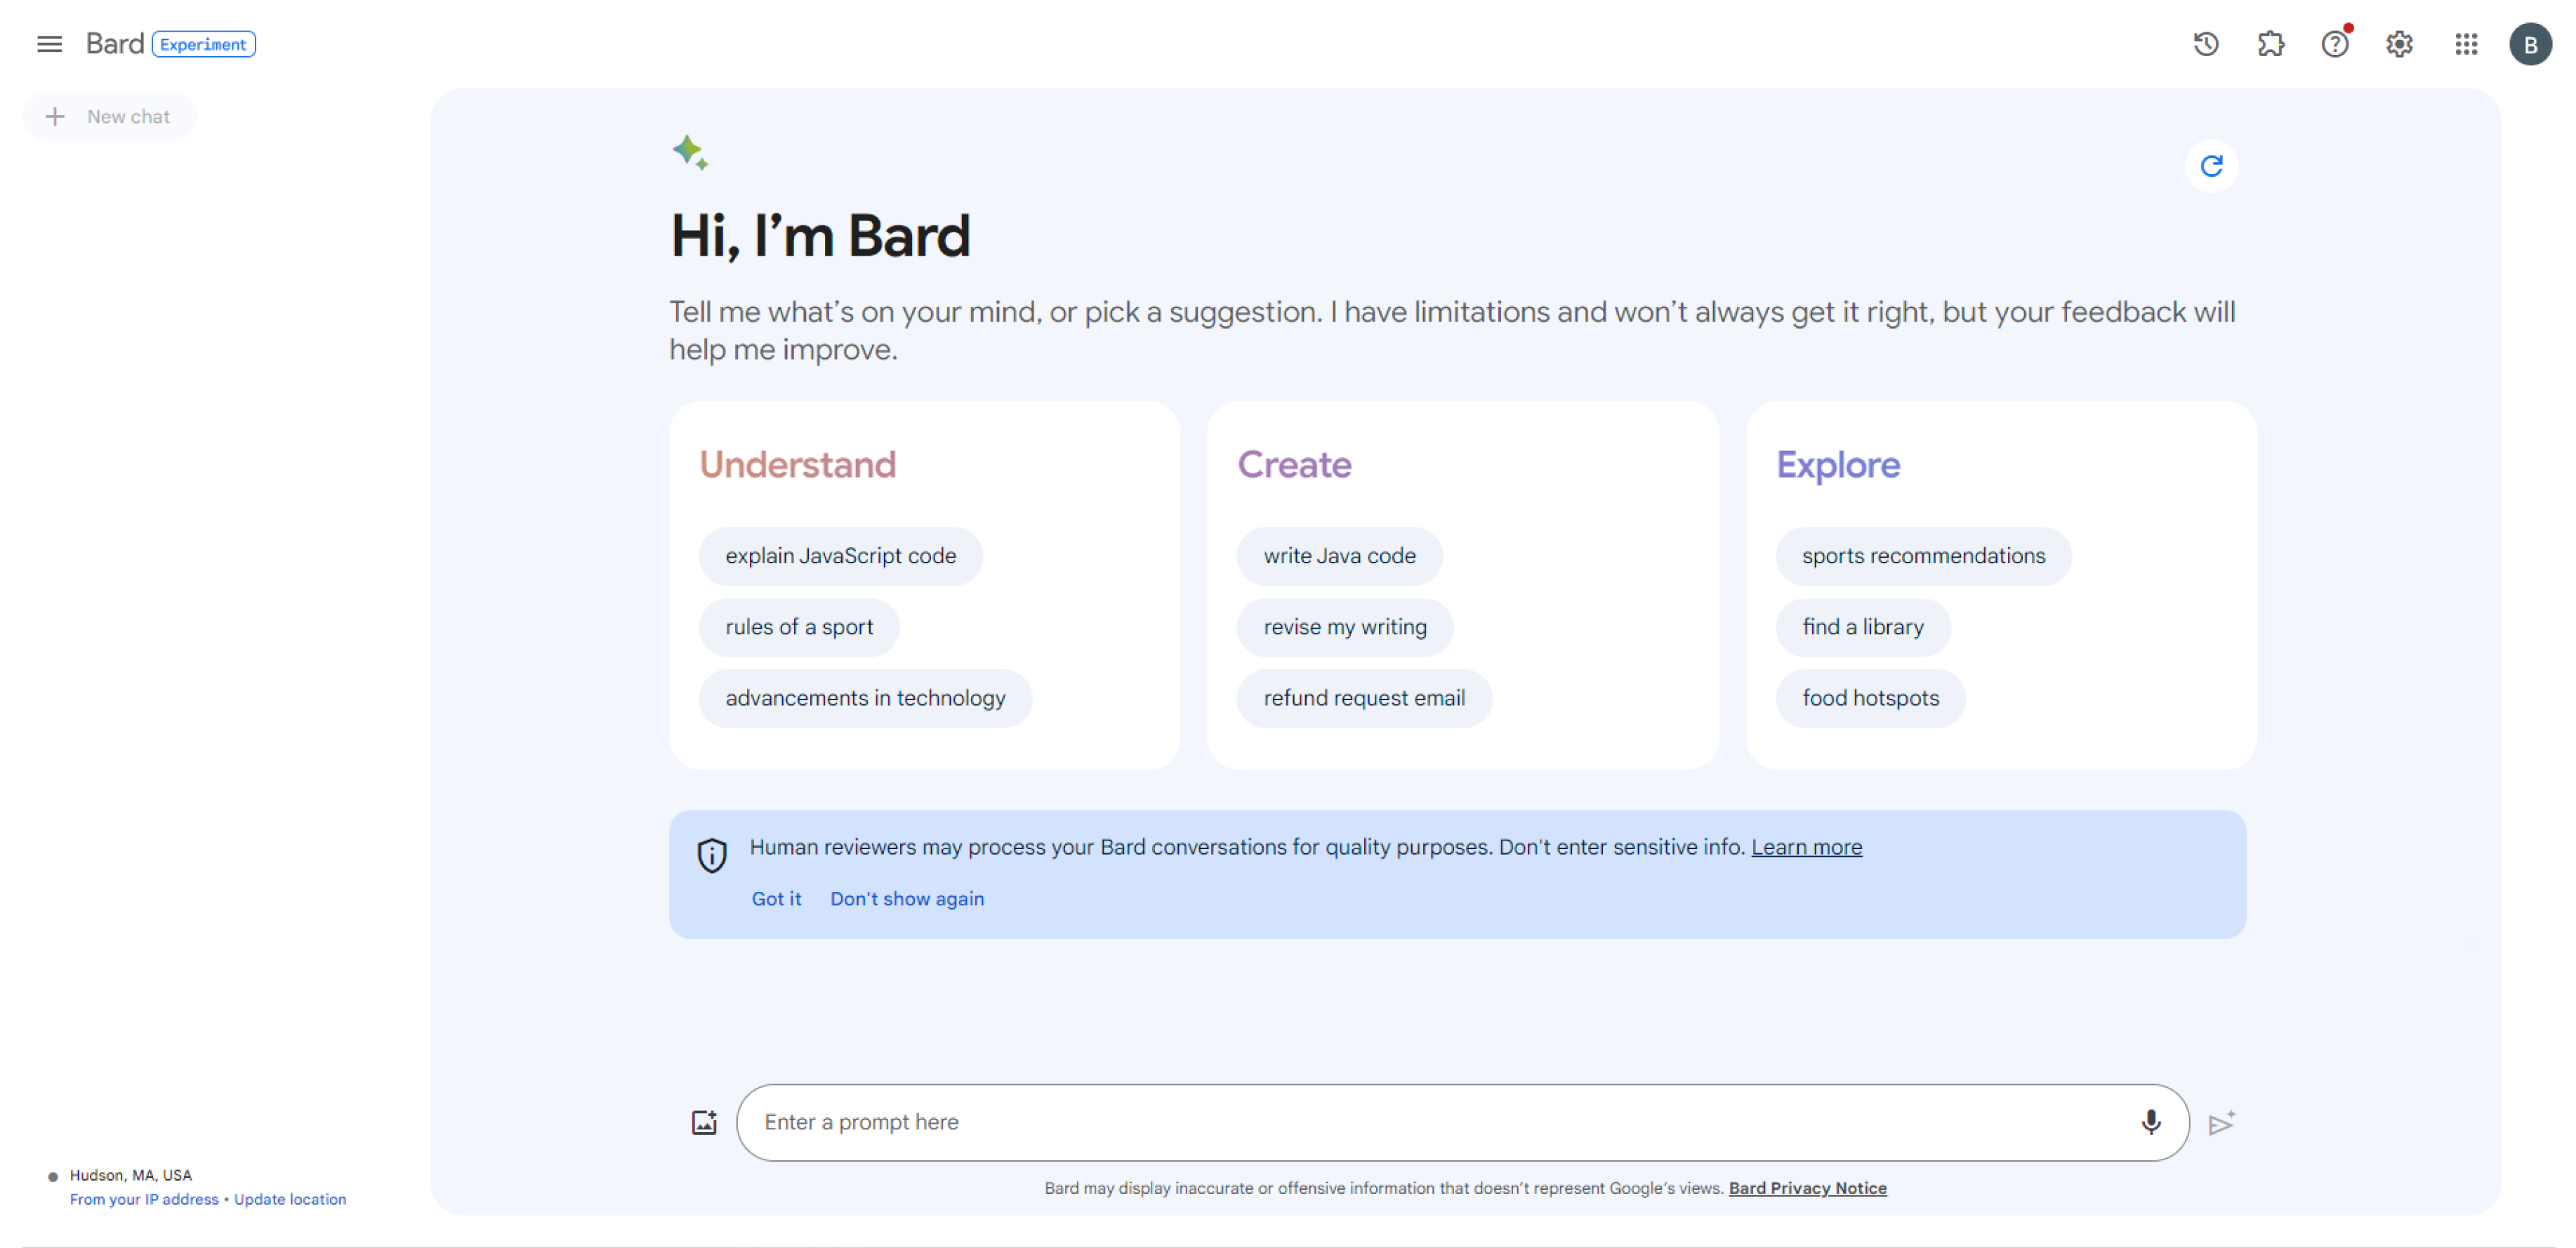 A screenshot of the Bard web app.